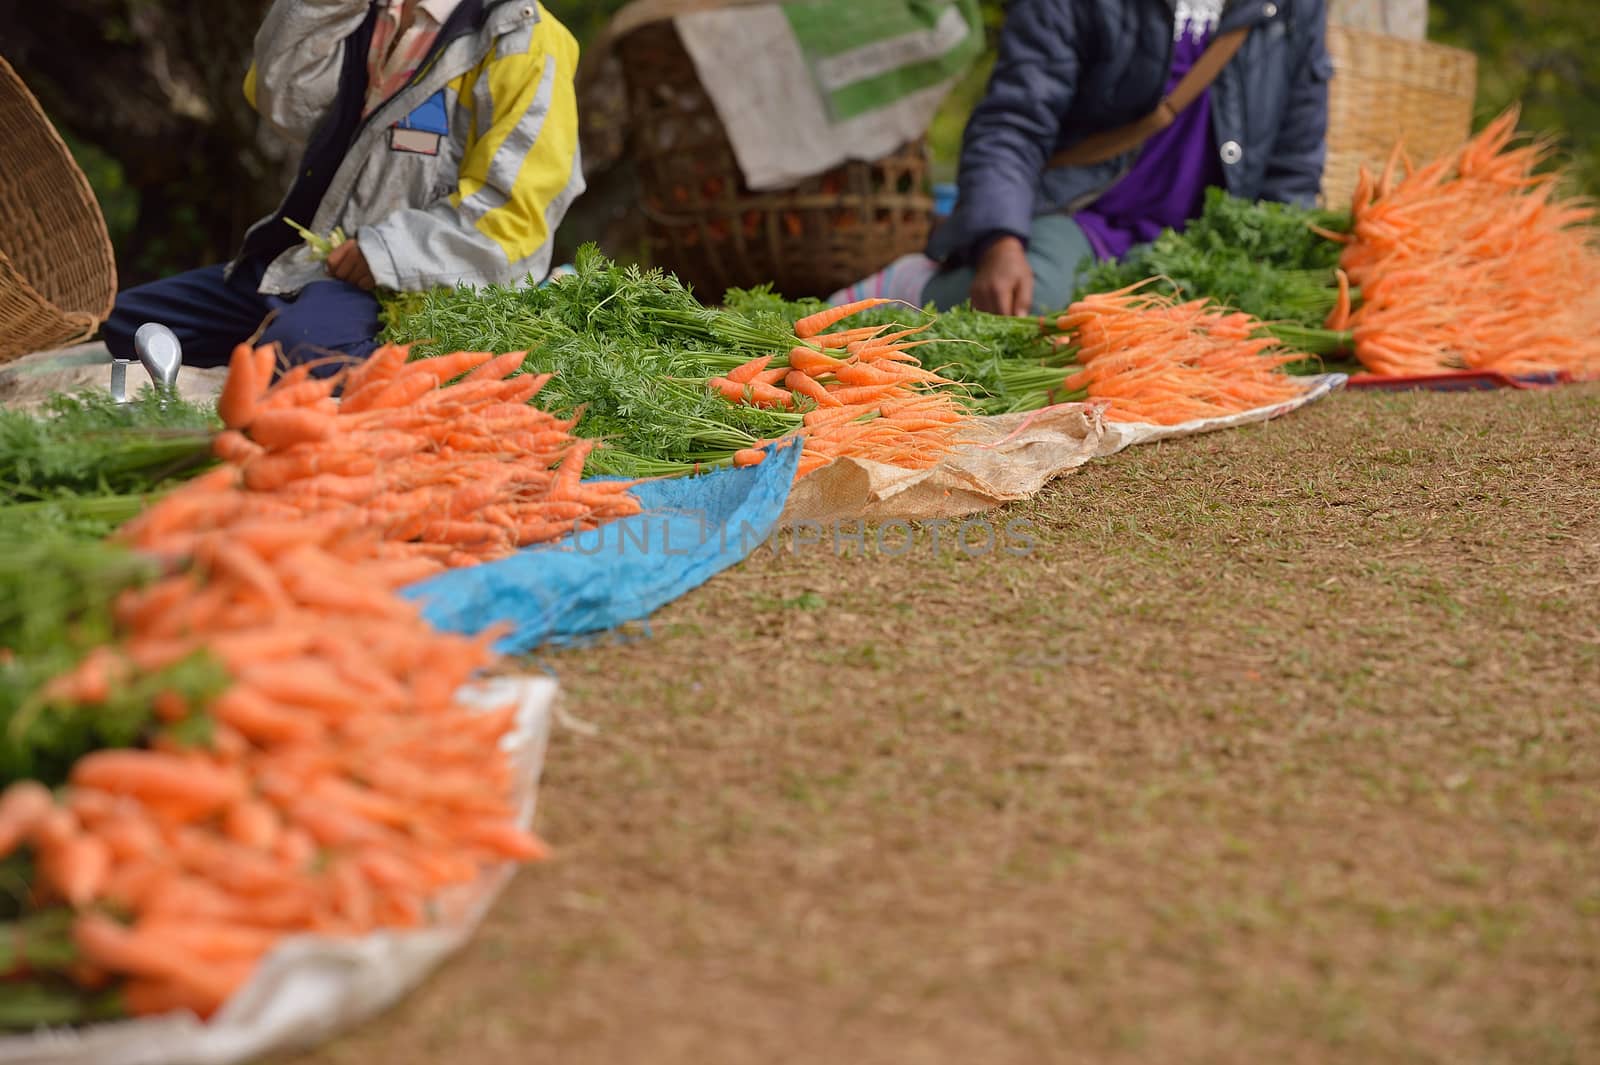 fresh carrots at Doi Angkhang royal project, Chiangmai, Thailand by think4photop